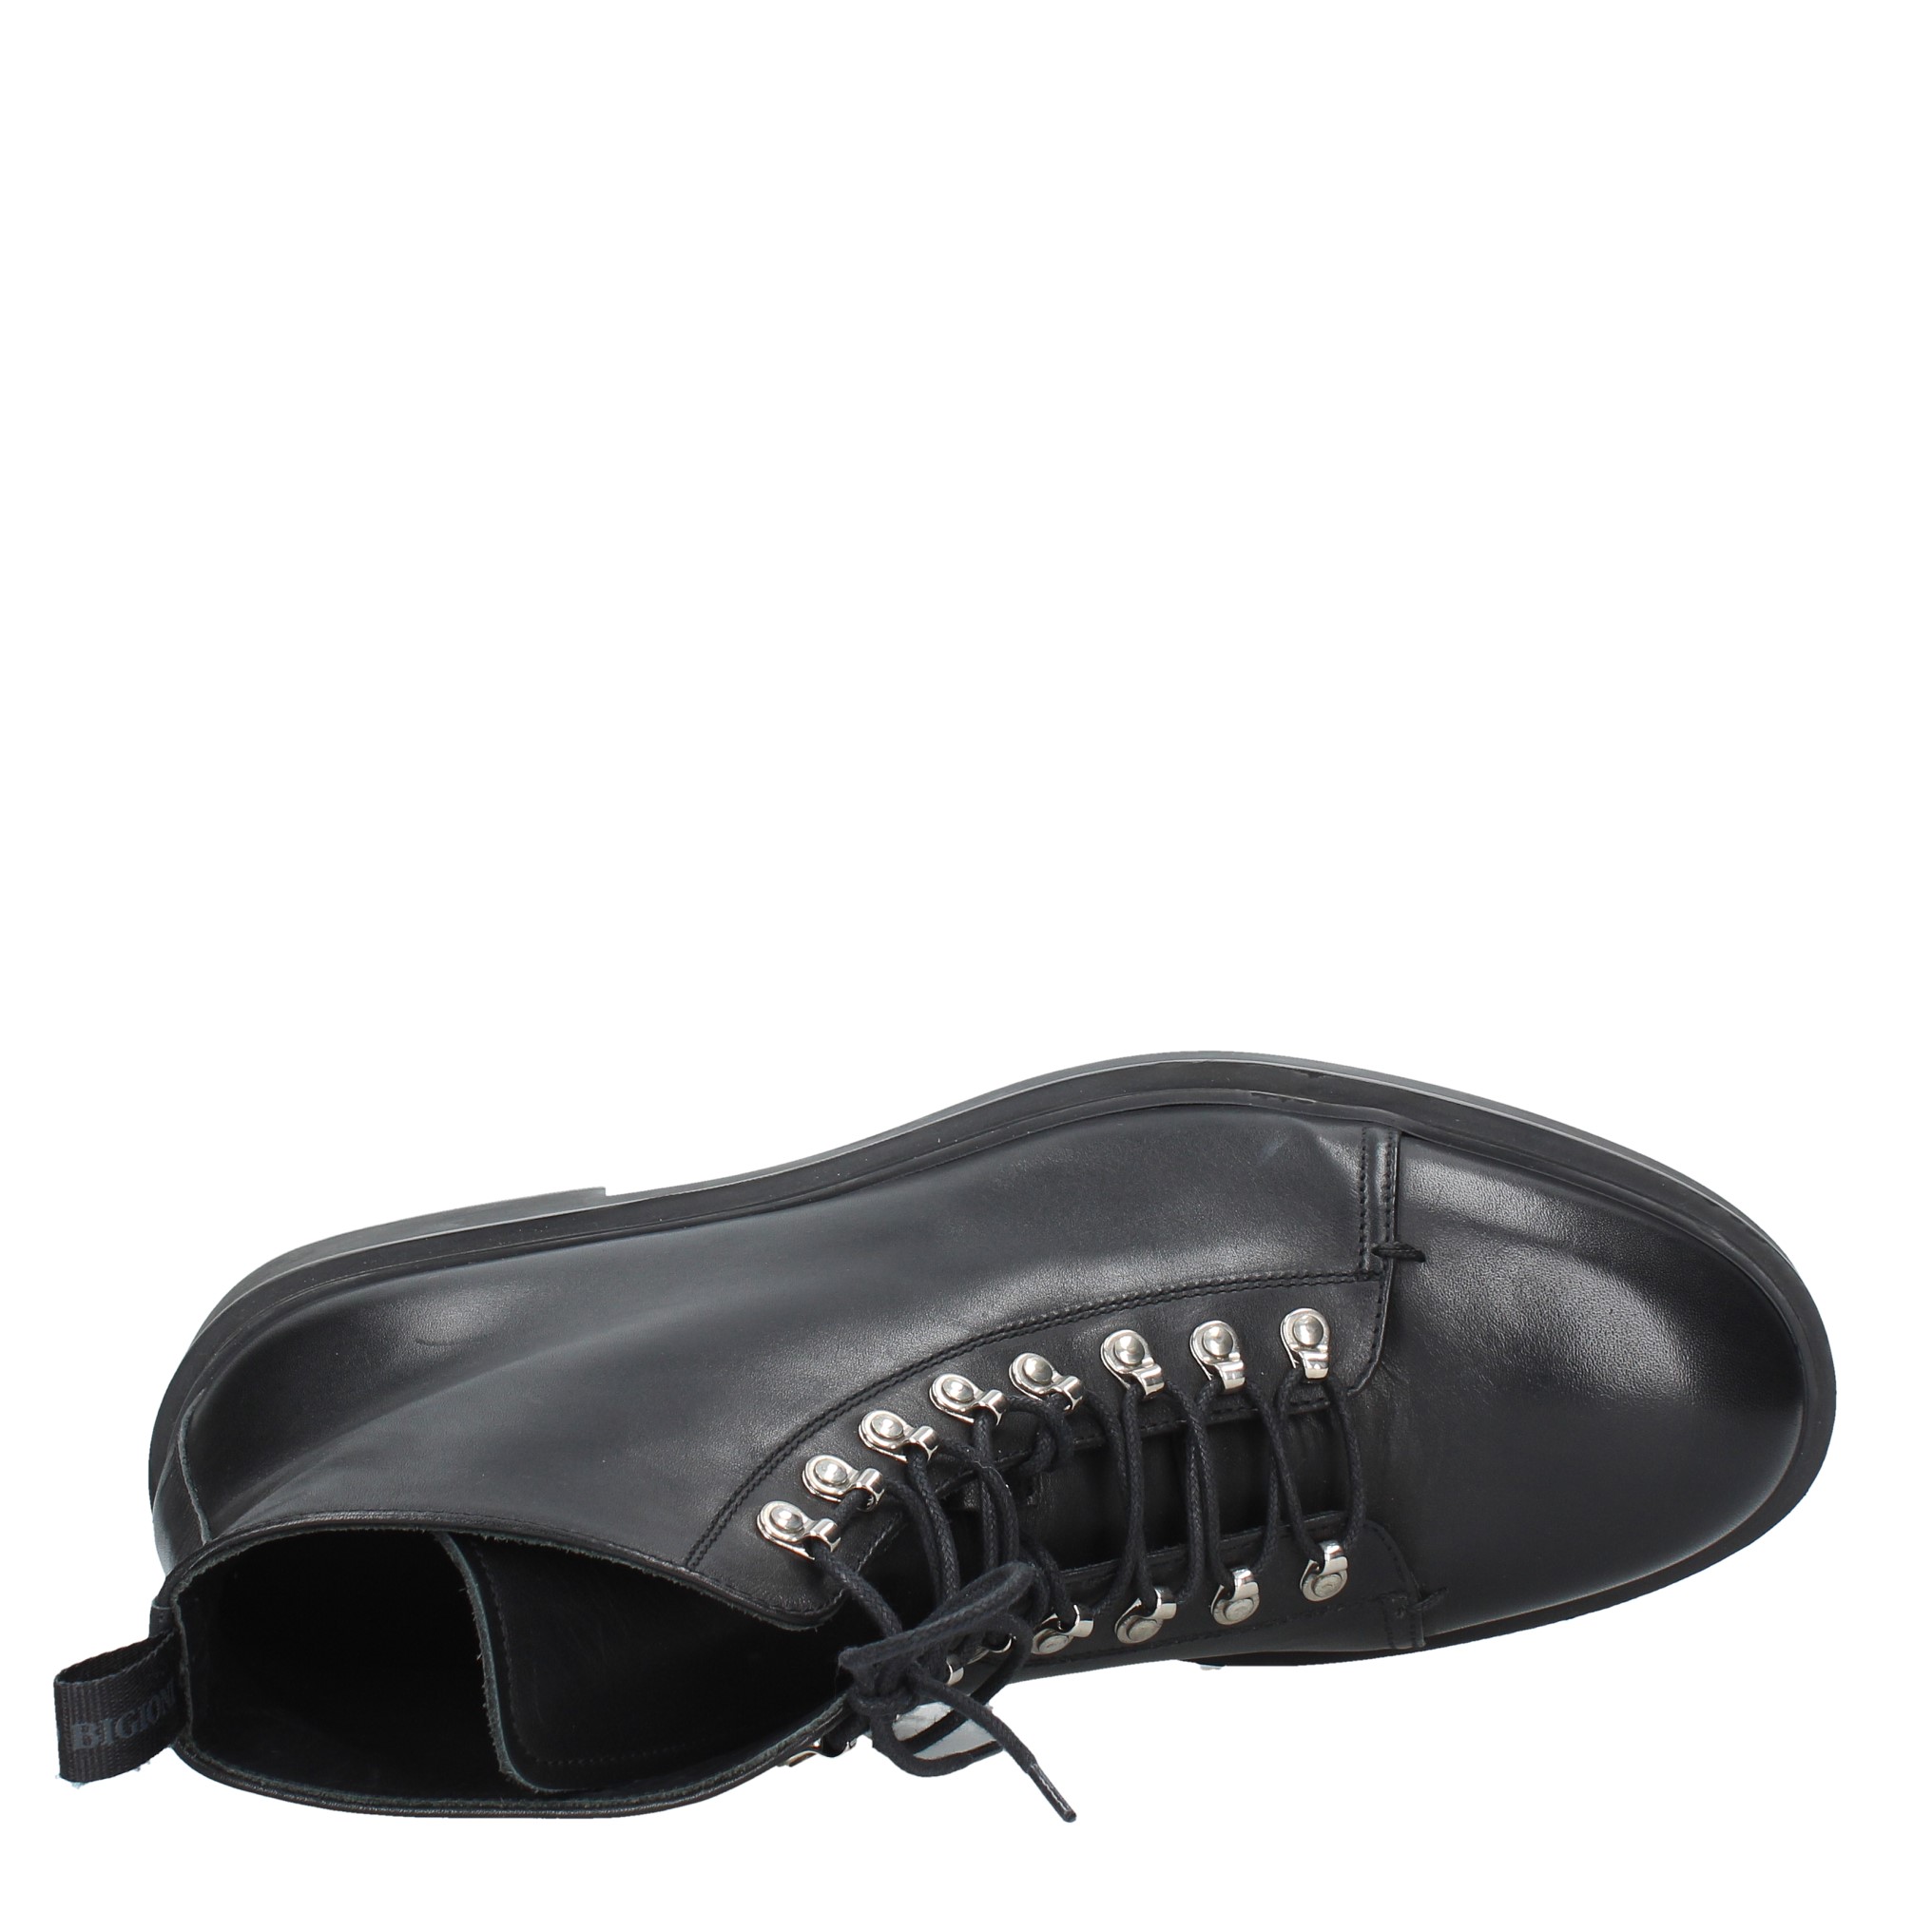 Ankle boots and boots Black - DINO BIGIONI - Ginevra calzature